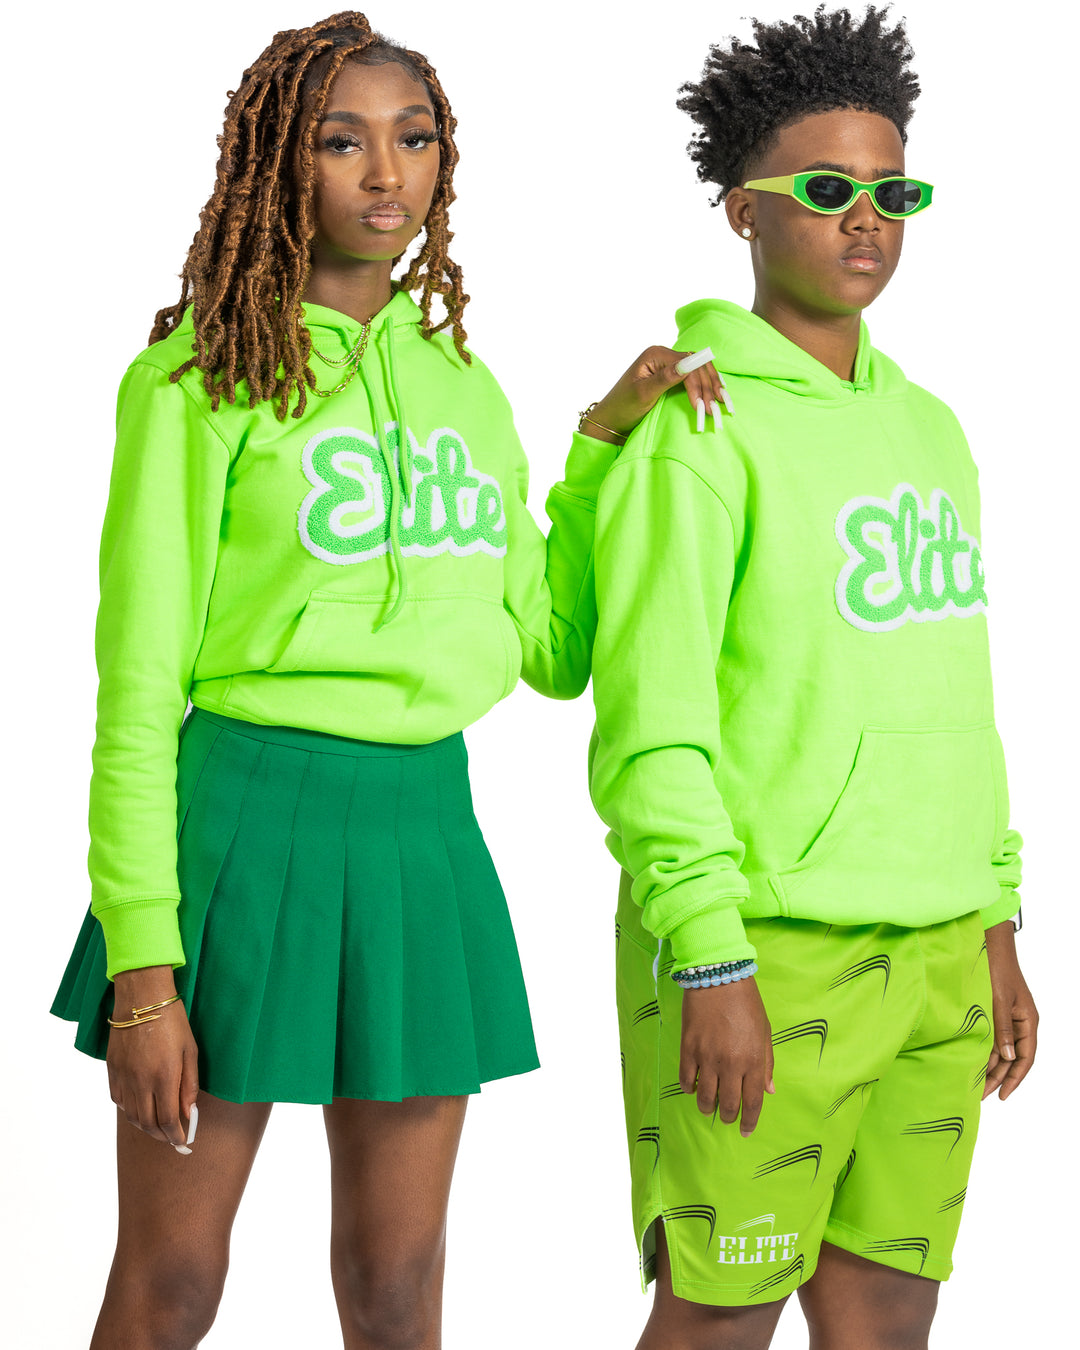 Elite - Chenille Hoodies - Lime Green